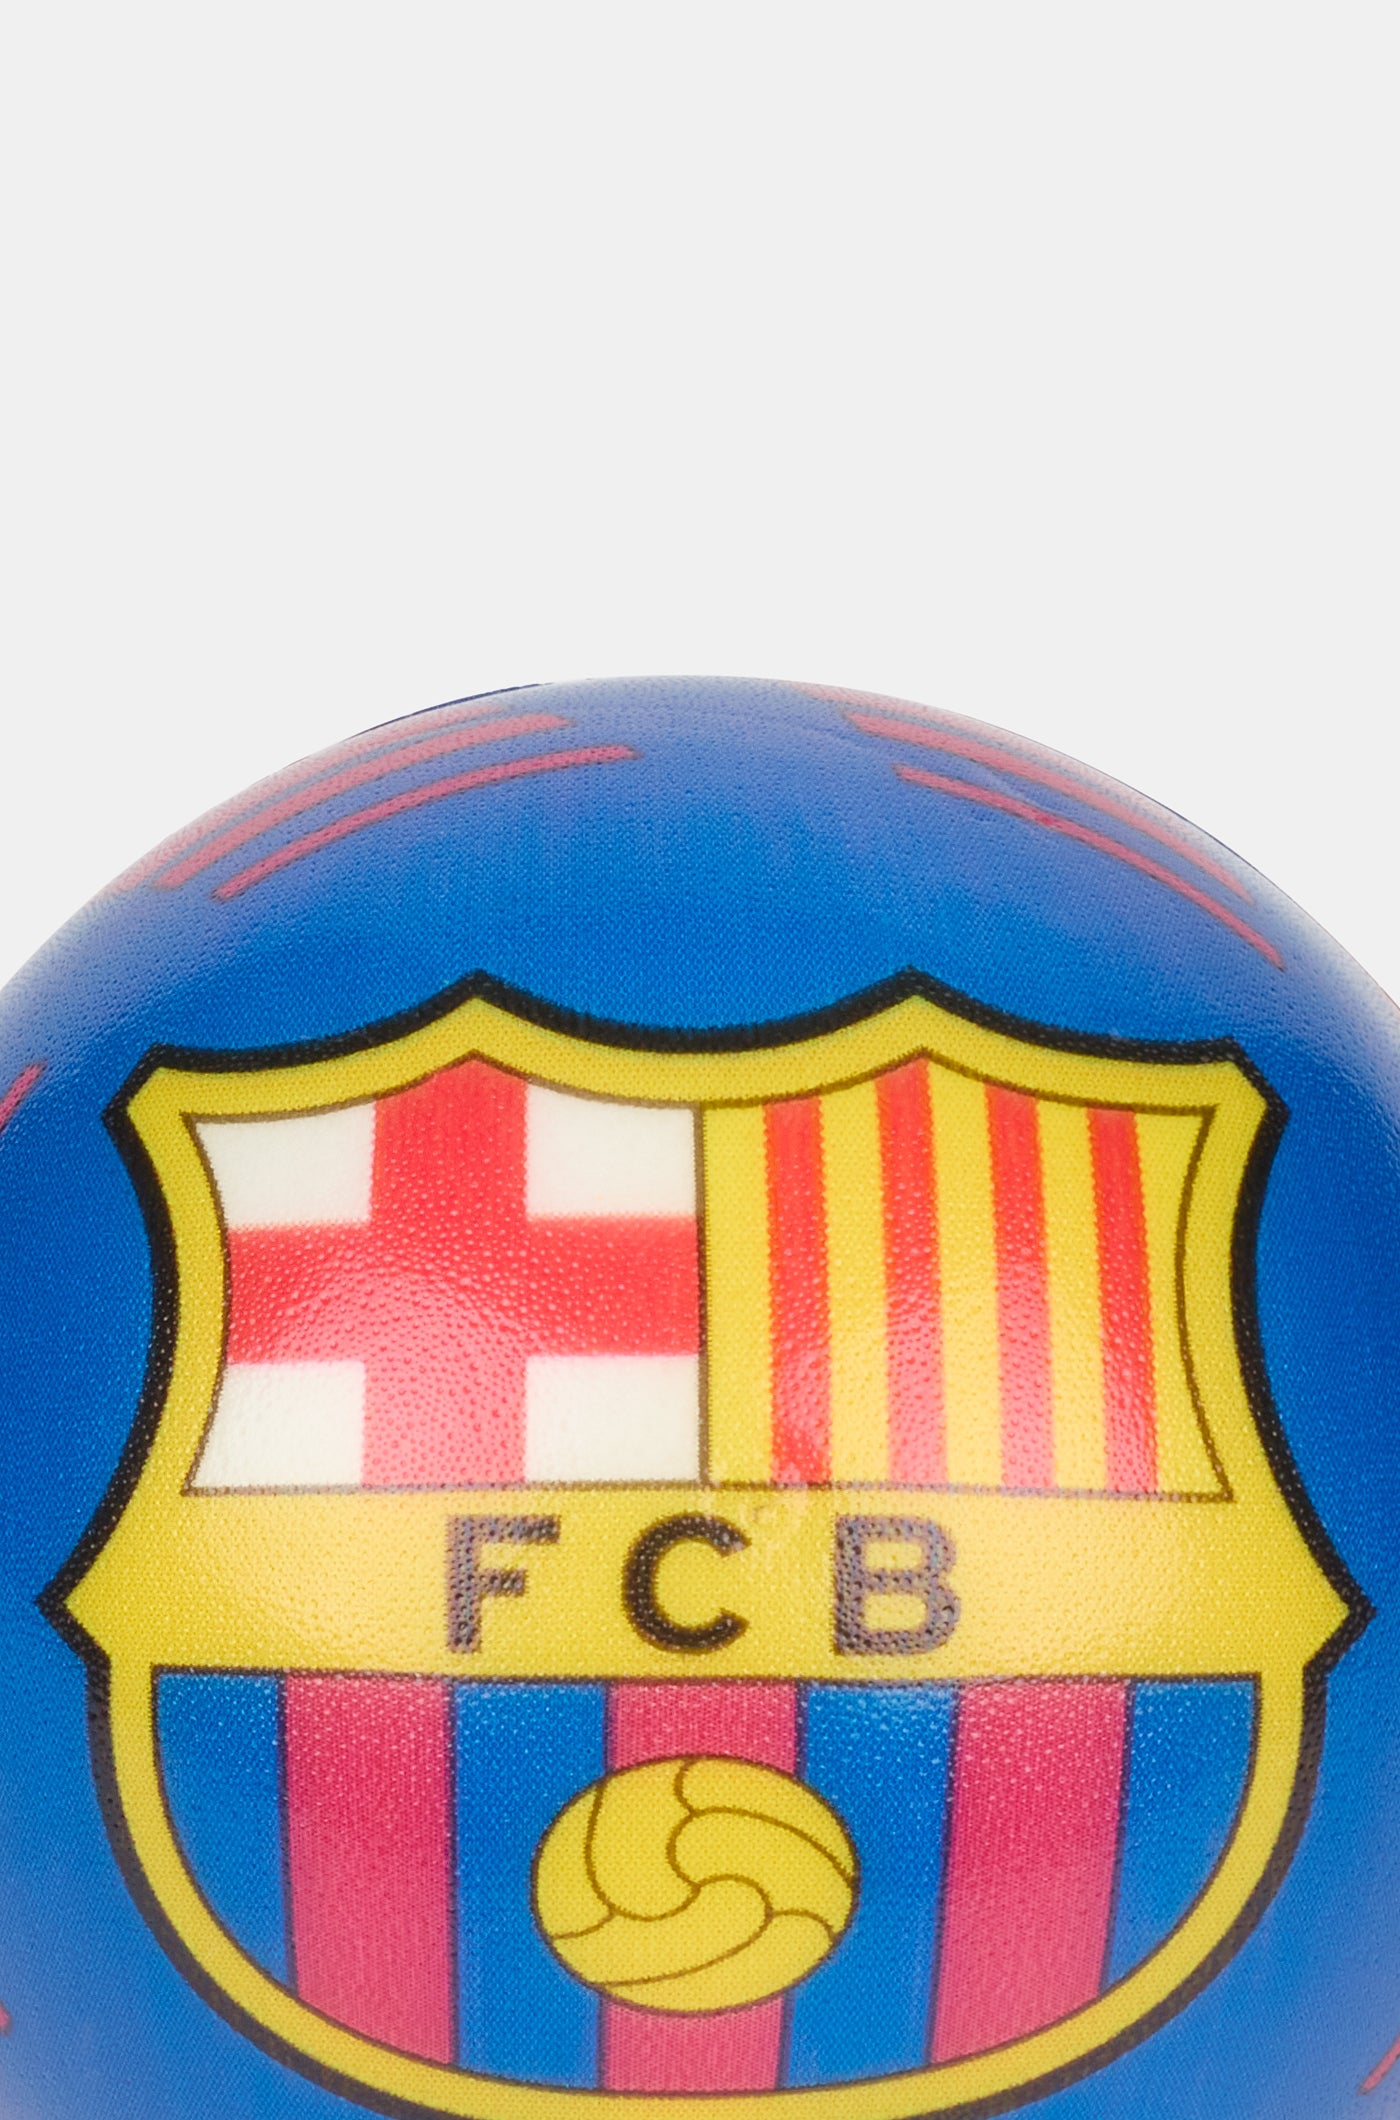 Antistressball FC Barcelona